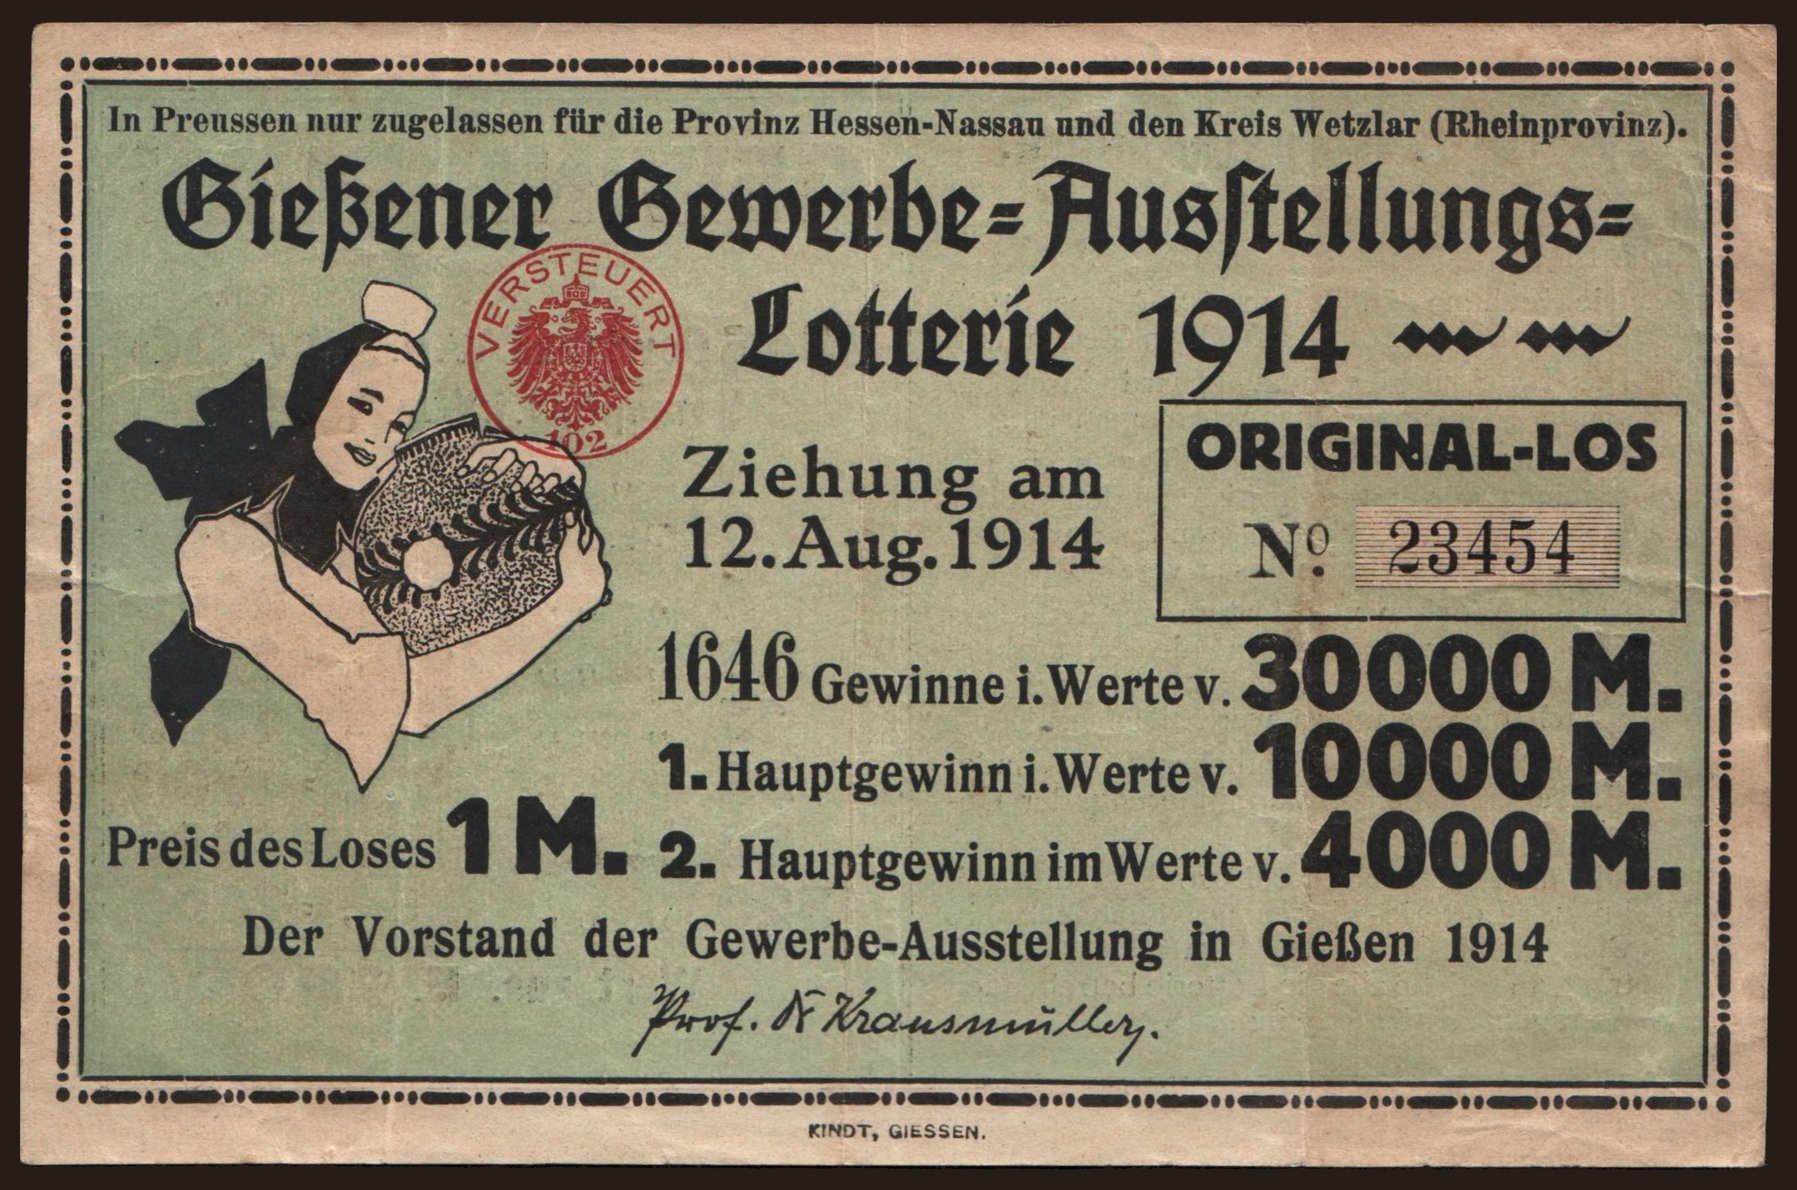 Giessener Gewerbe-Austellungs-Lotterie, 1 mark, 1914